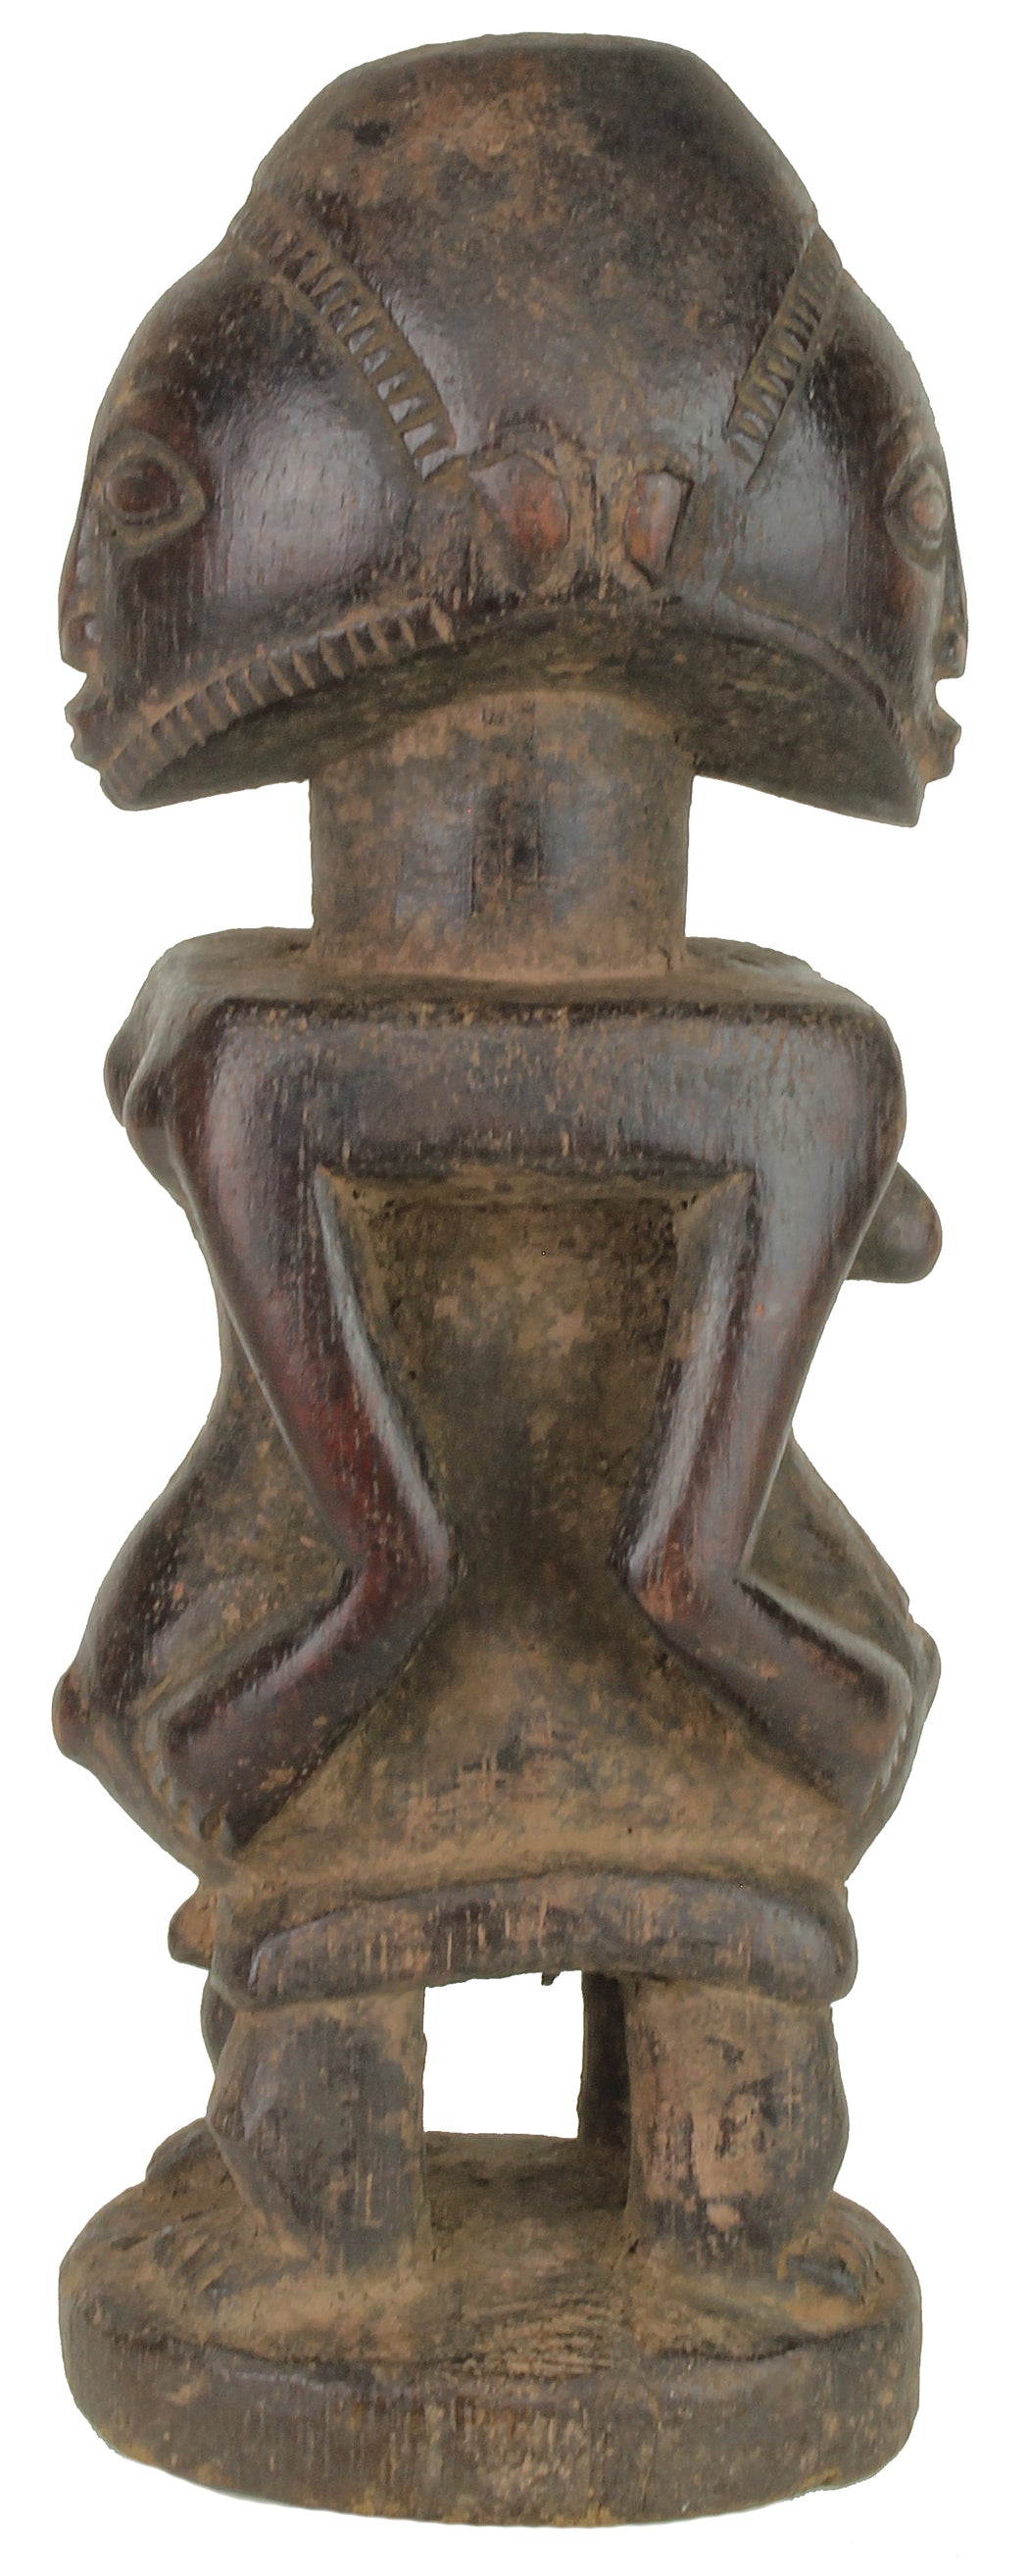 Luba Tribal Power Figure Statue of Congo | 9" - Niger Bend